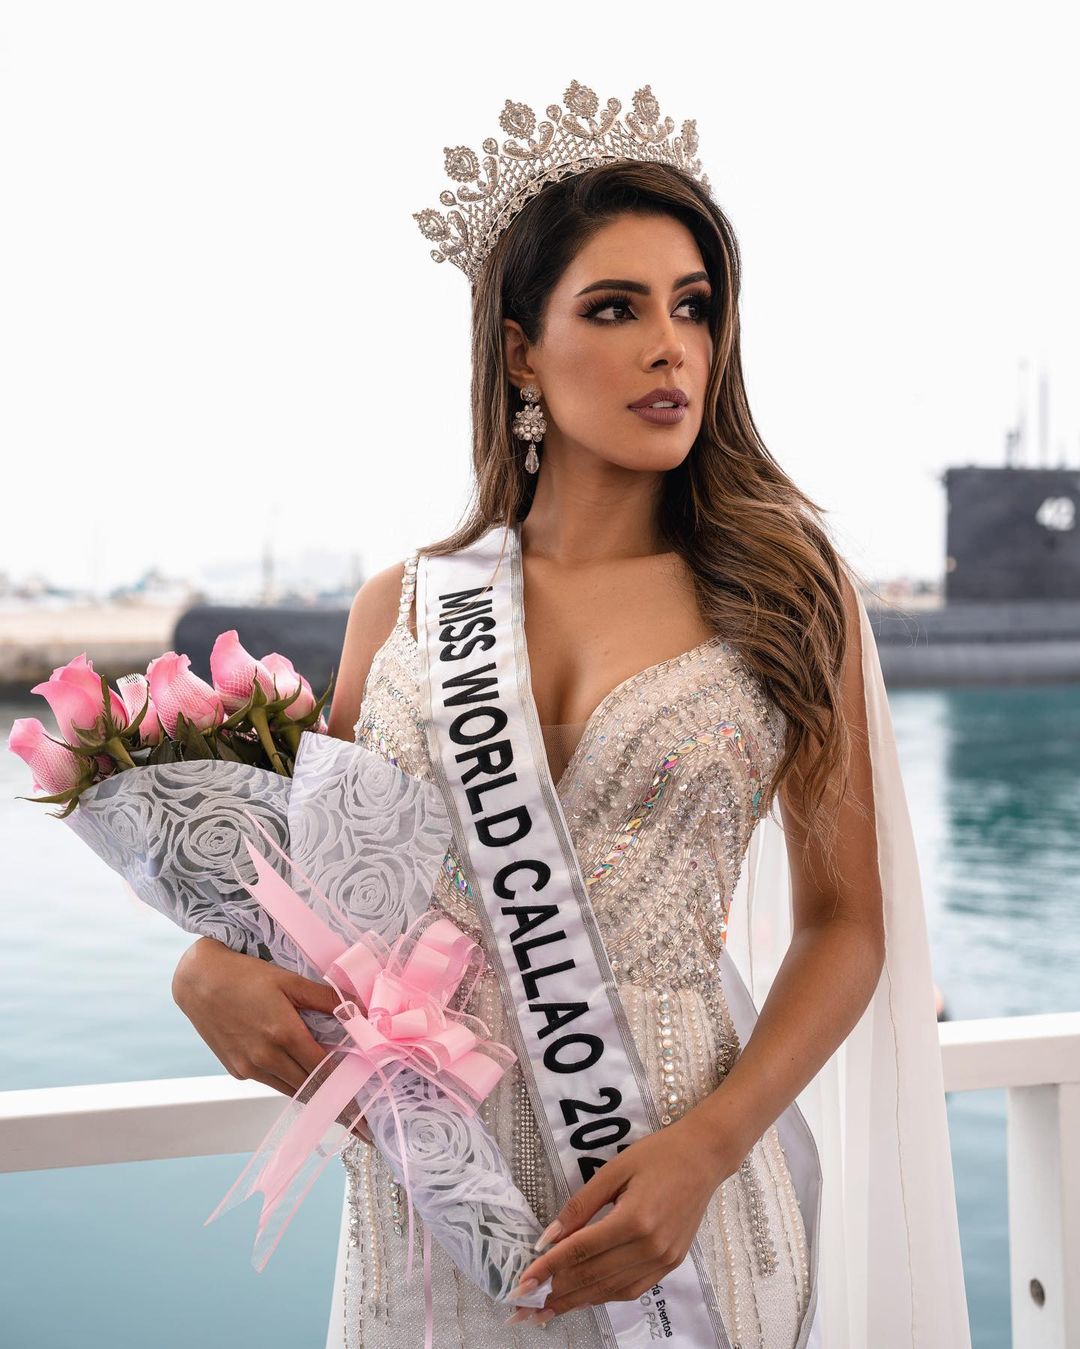 Almendra Castillo została koronowana na Miss Peru 2022 (Zdjęcie: Instagram / @almendracastilloobrien)